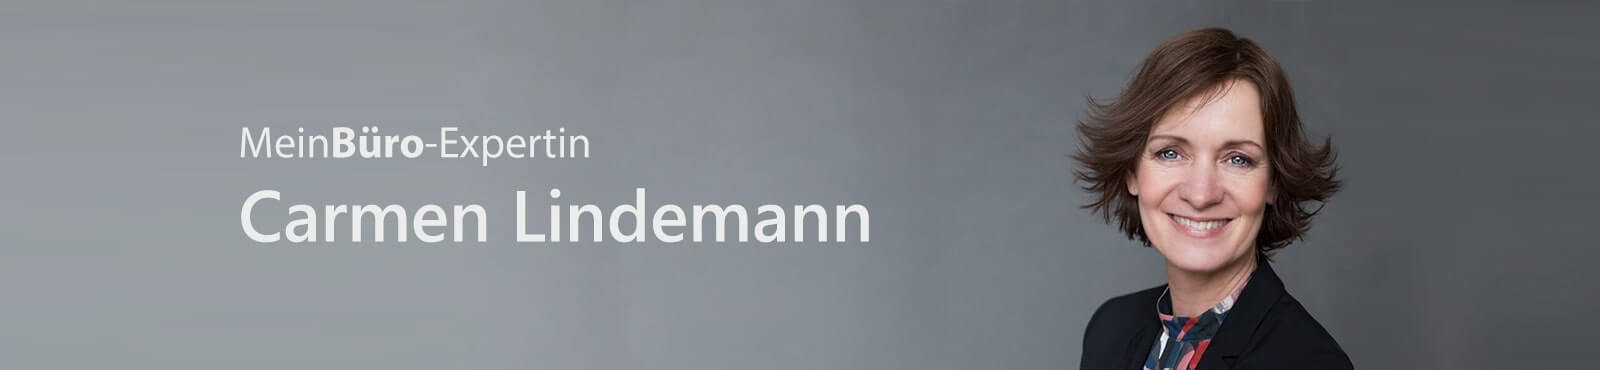 Carmen Lindemann: Expertin für MeinBüro Bürosoftware